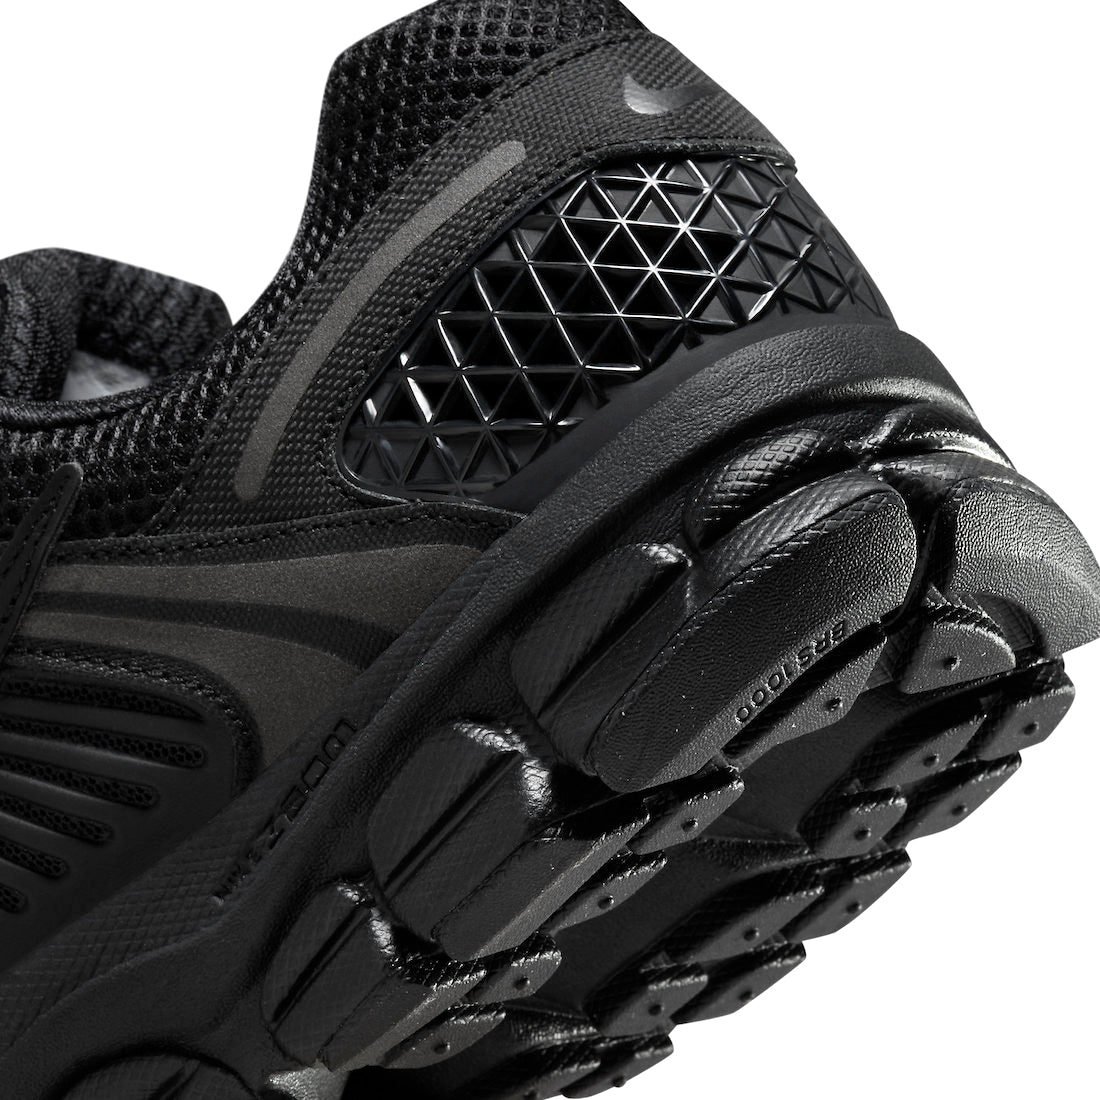 Nike Zoom Vomero 5 - Black/Black